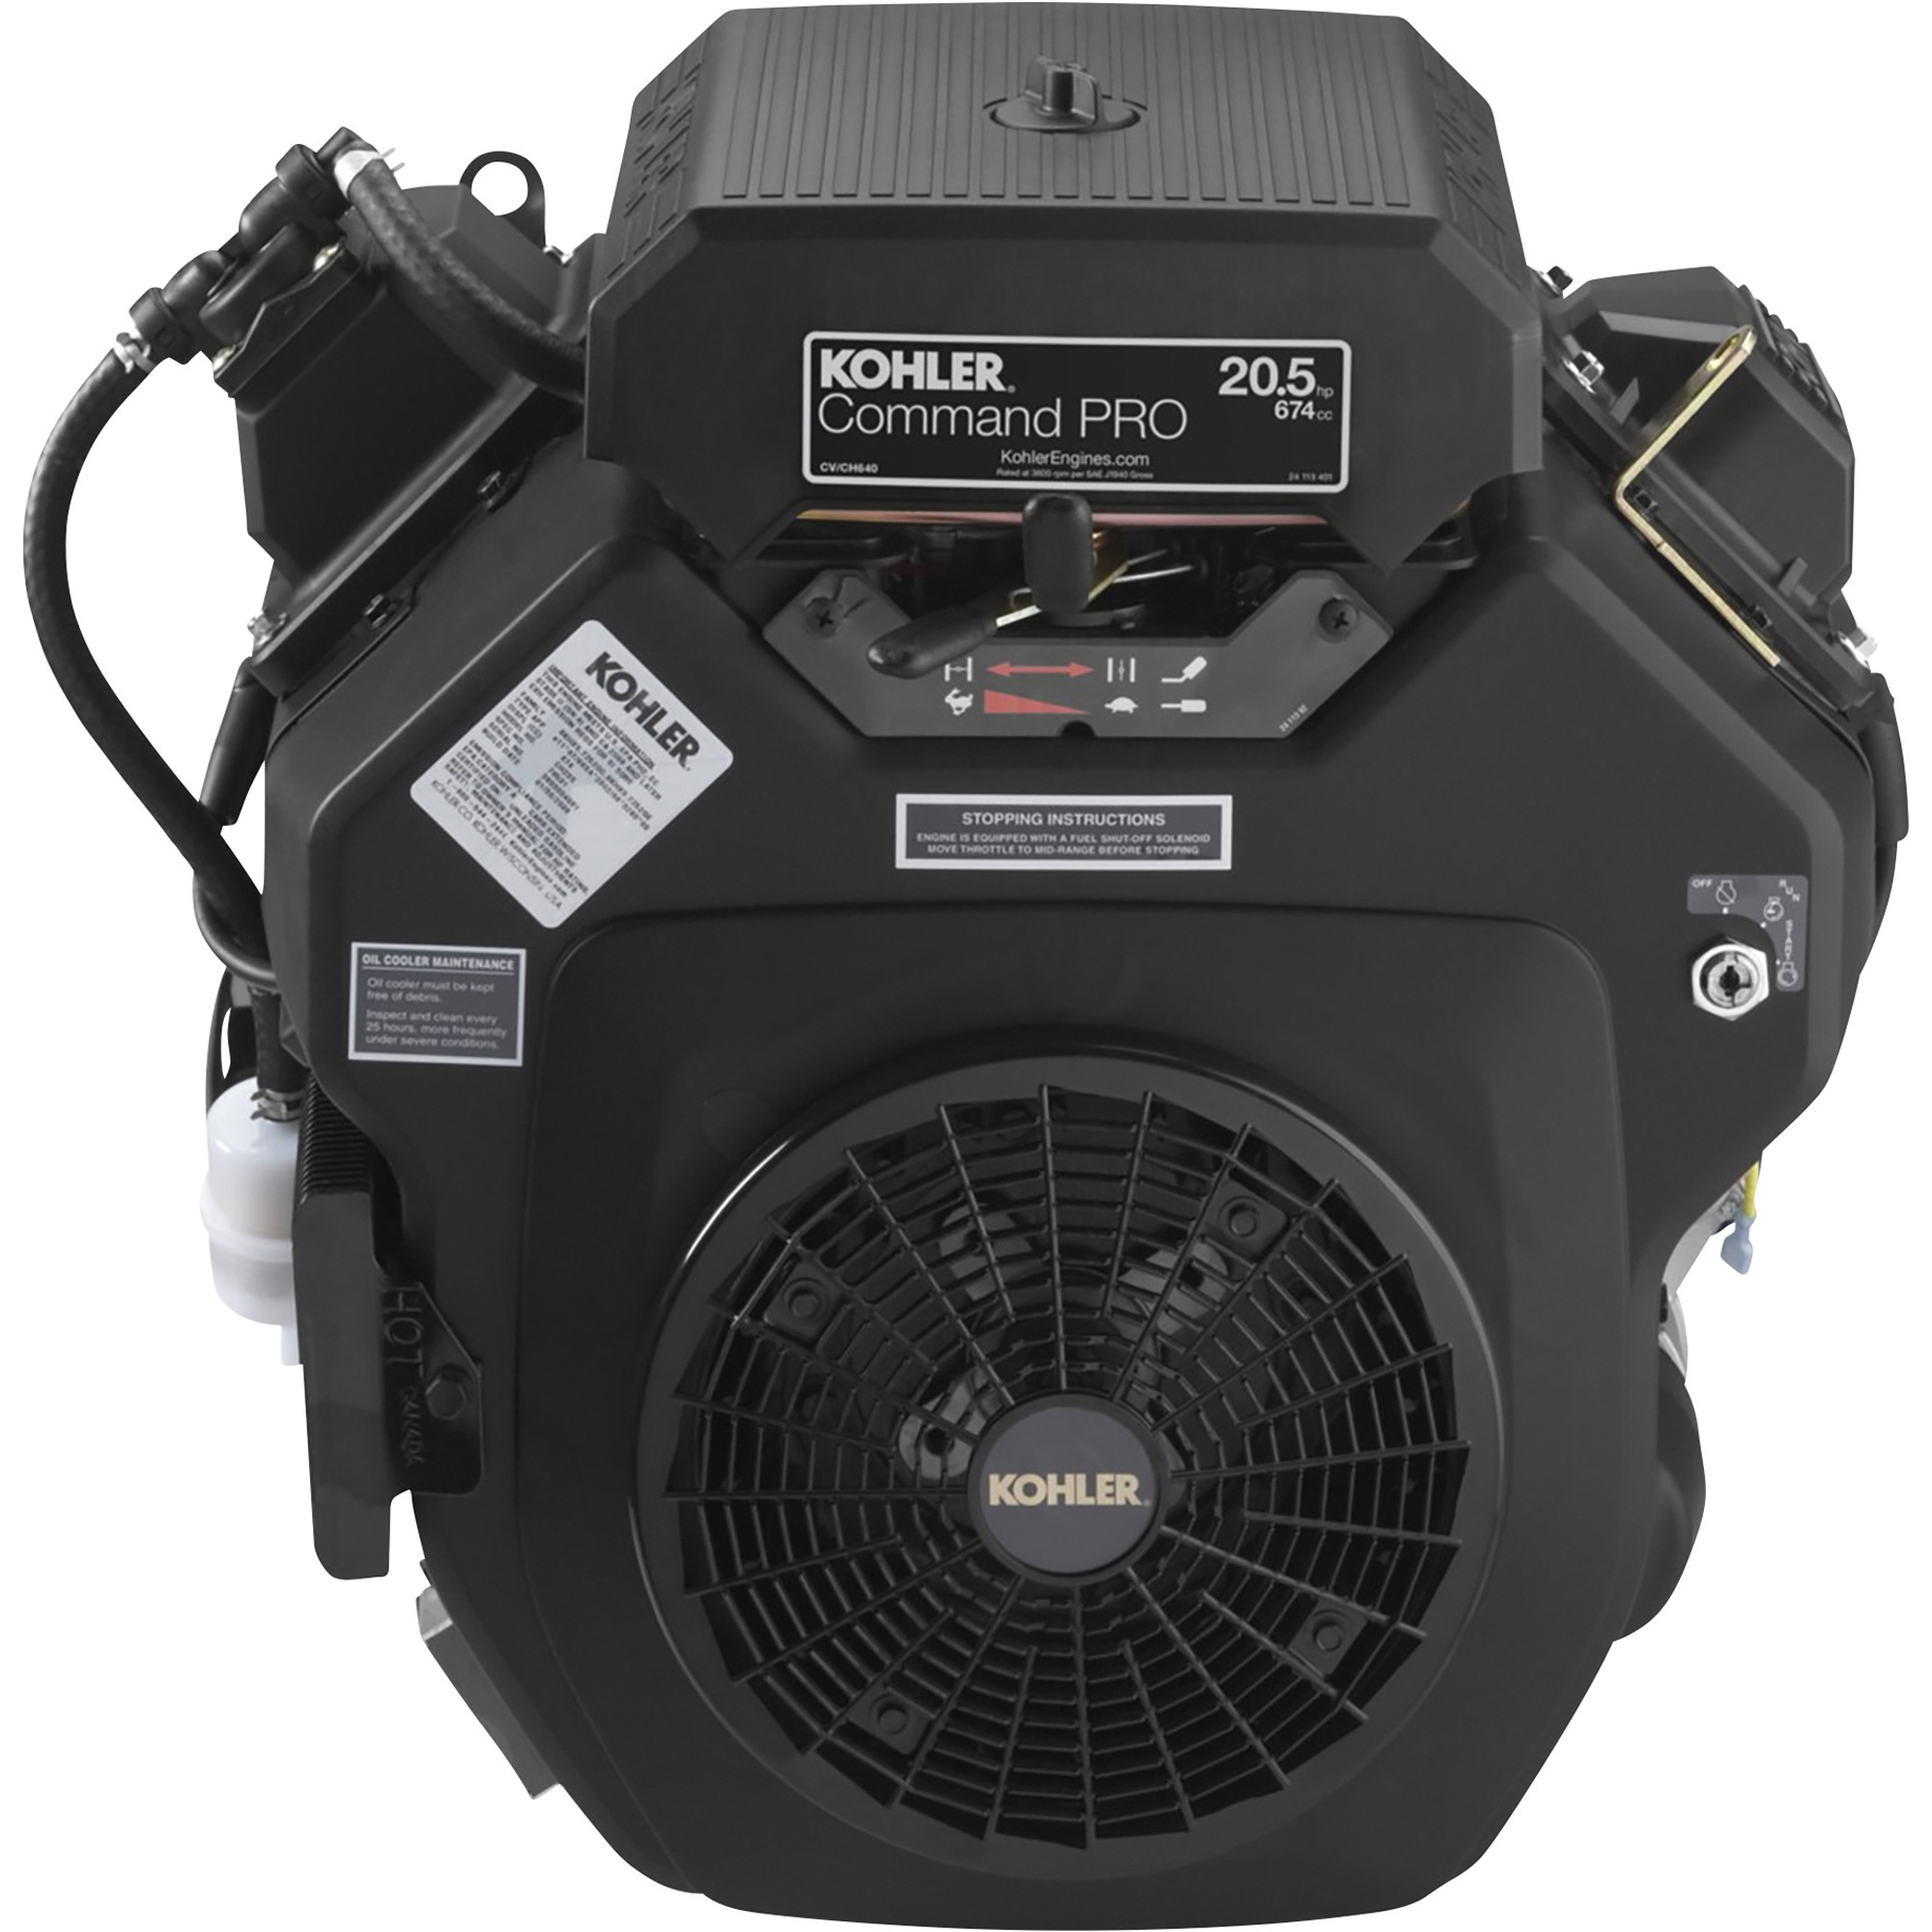 Kohler Command OHV Horizontal Engine with Electric Start â 674cc, 20.5 HP, 1.125Inch x 4Inch Shaft, Model PA-CH640-3230